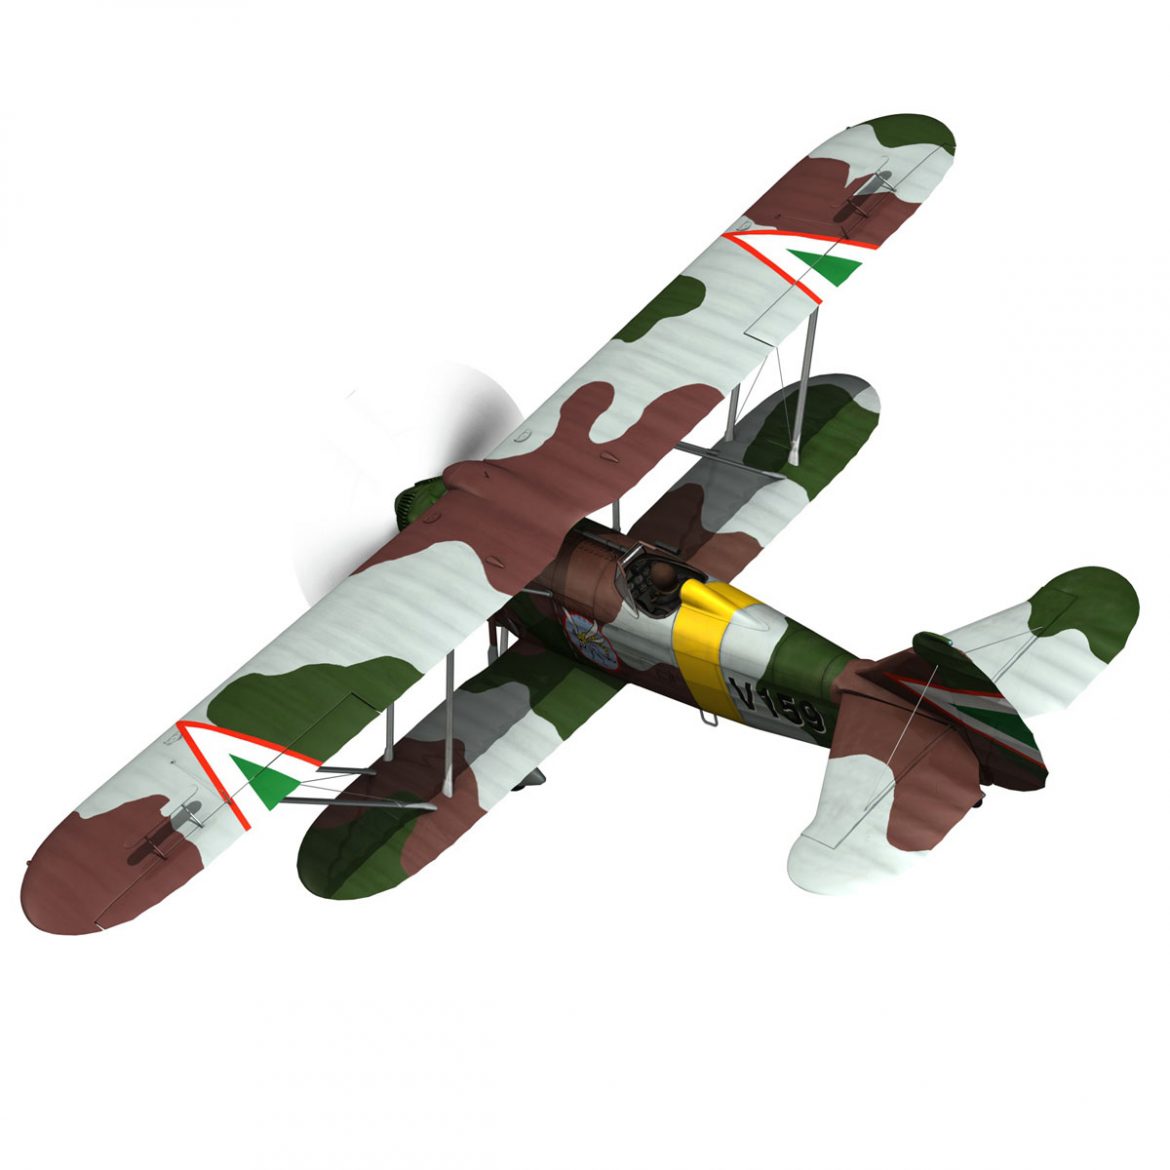 fiat cr.32 – hungarian royal air force – v159 3d model fbx c4d lwo obj 299966